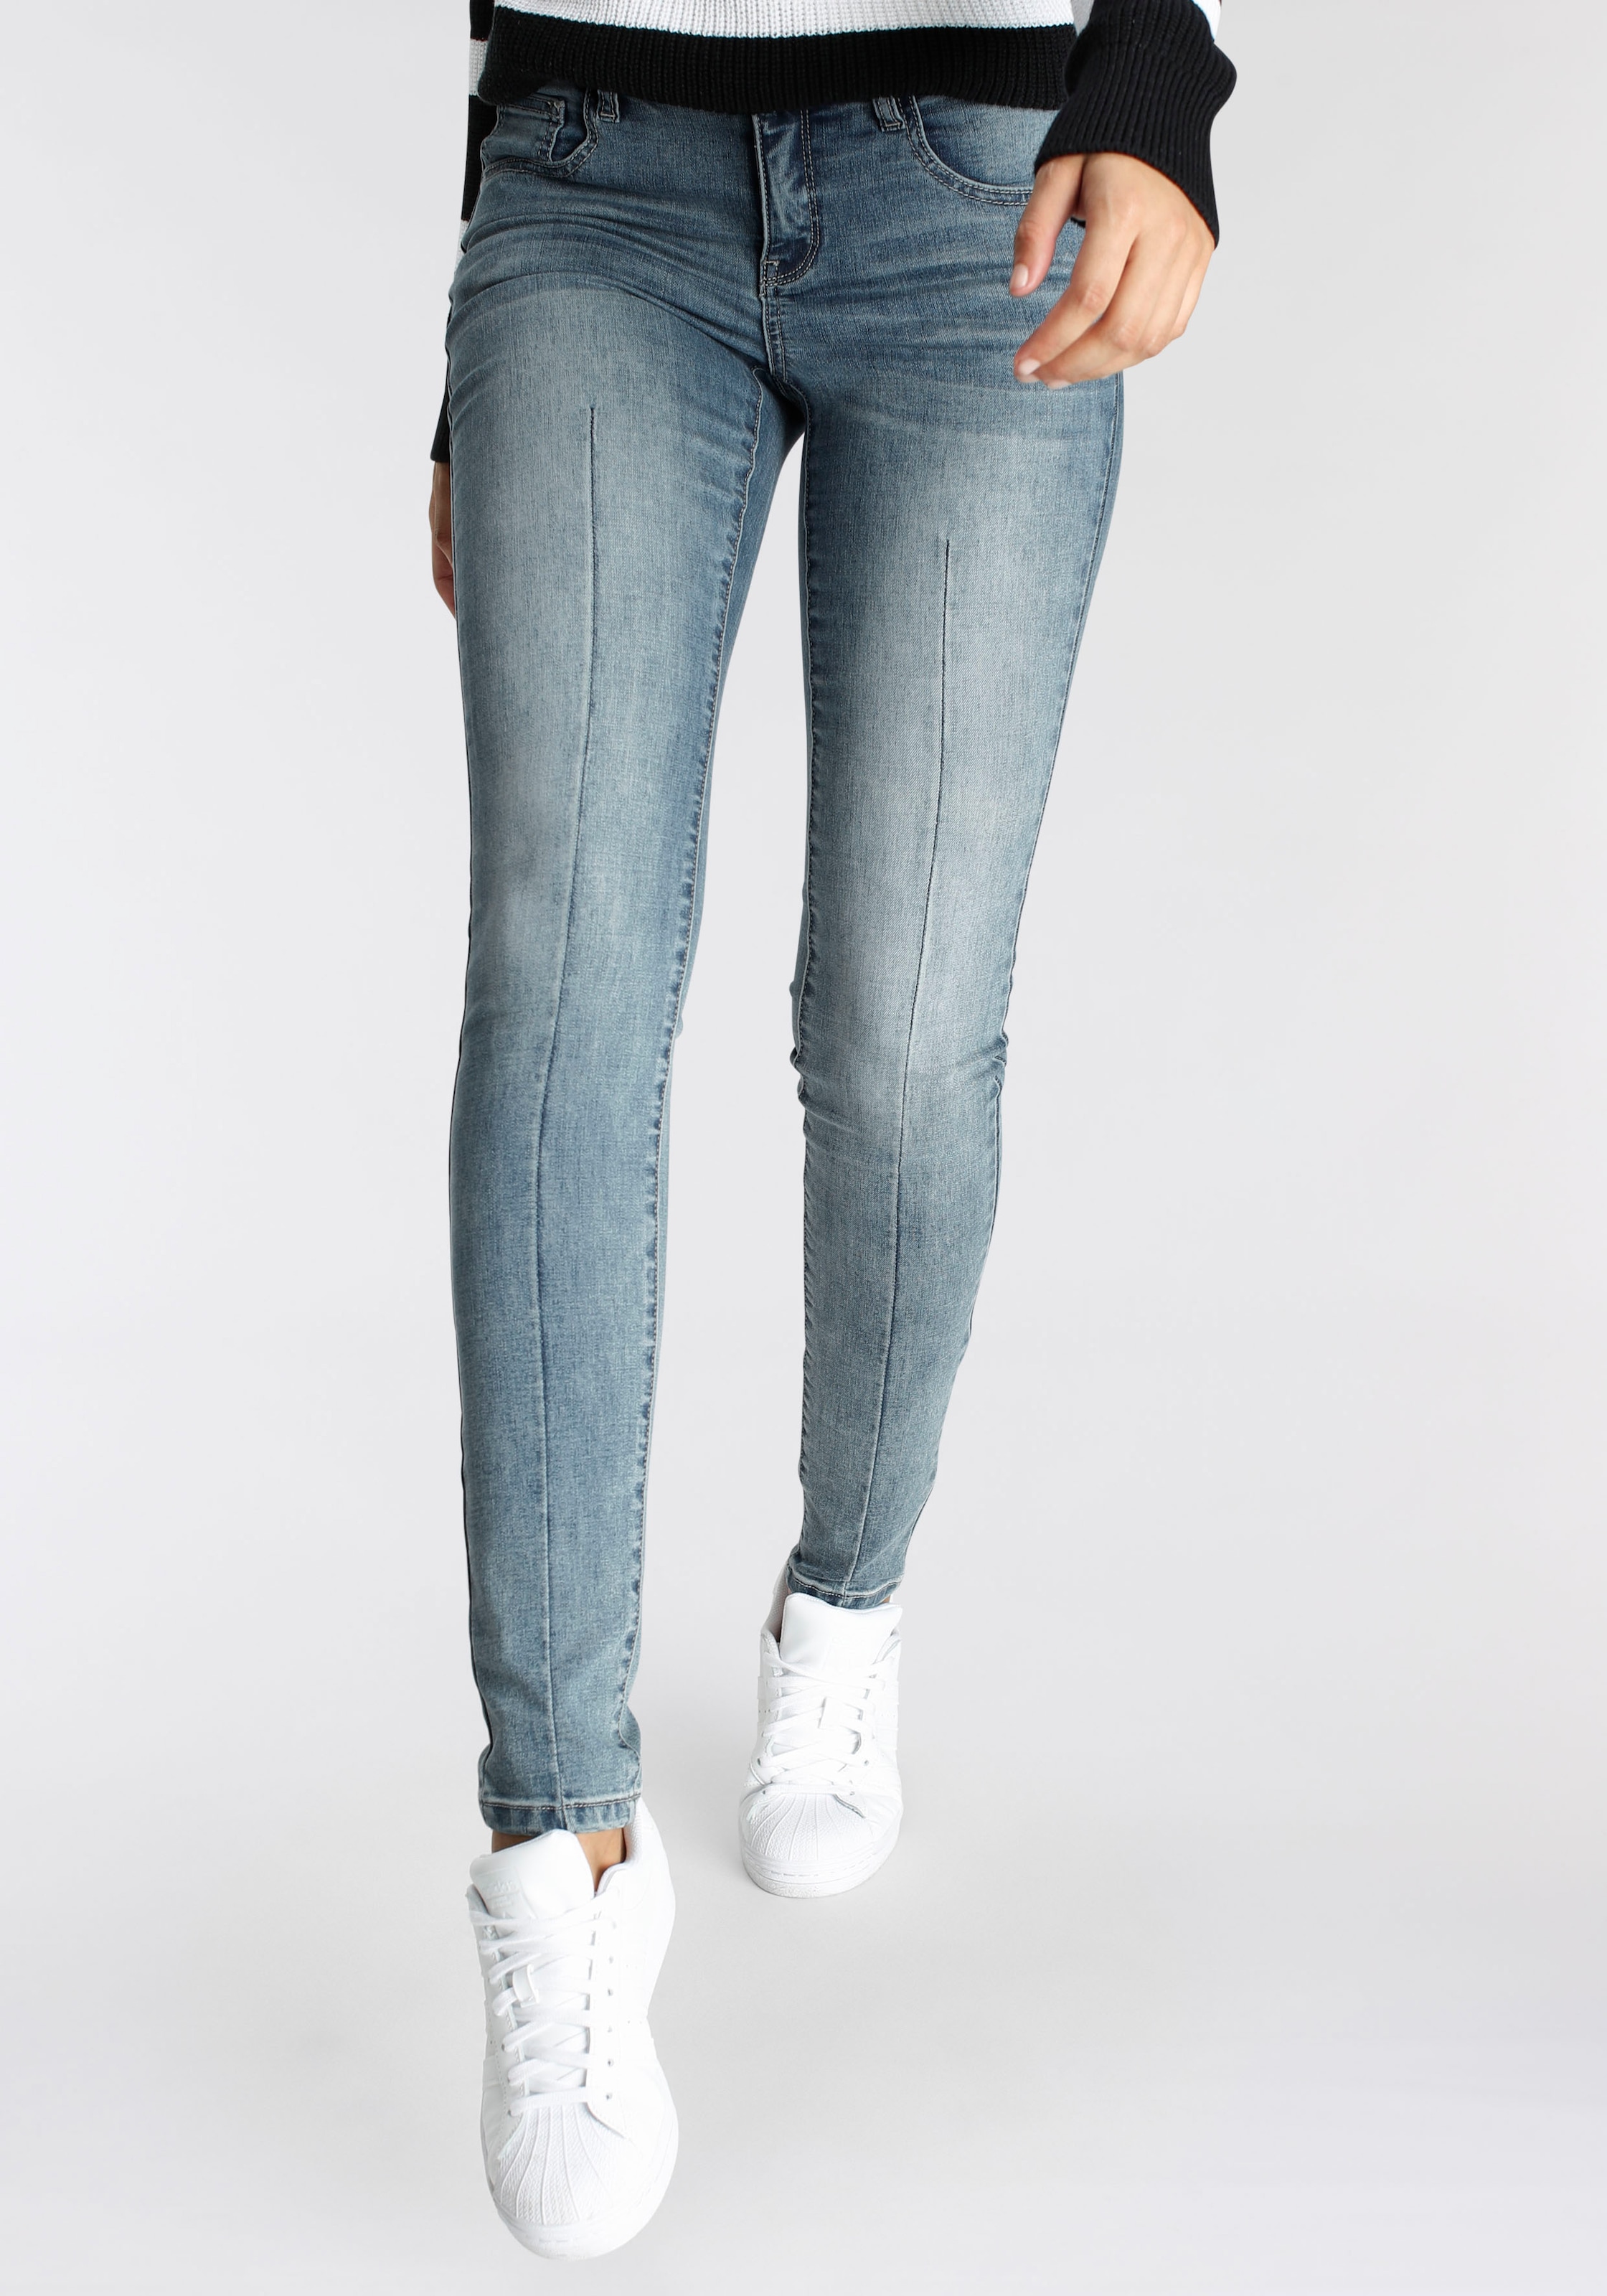 Arizona Skinny-fit-Jeans figurbetont Waist sehr Leibhöhe zu Denim bequem, high »Ultra-Stretch, normale kombinieren«, stretch shoppen Mid performance gut